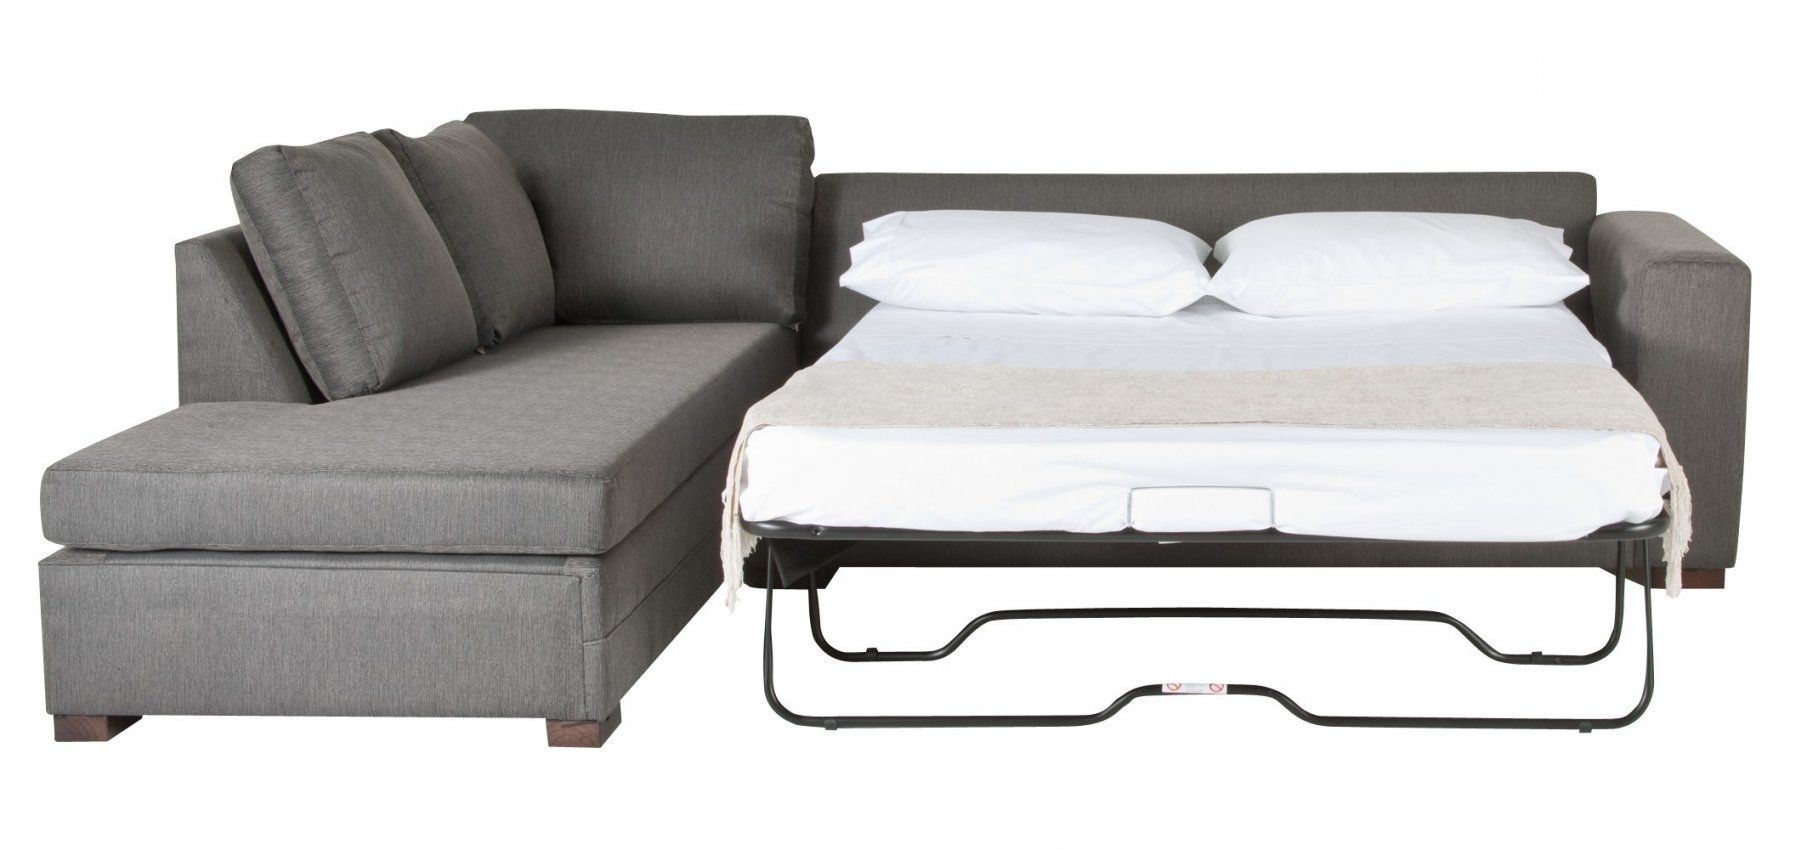 Sofa Design: Elegant L Shaped Sectional Sleeper Sofa L Inside Inside L Shaped Sectional Sleeper Sofas (Photo 3 of 10)